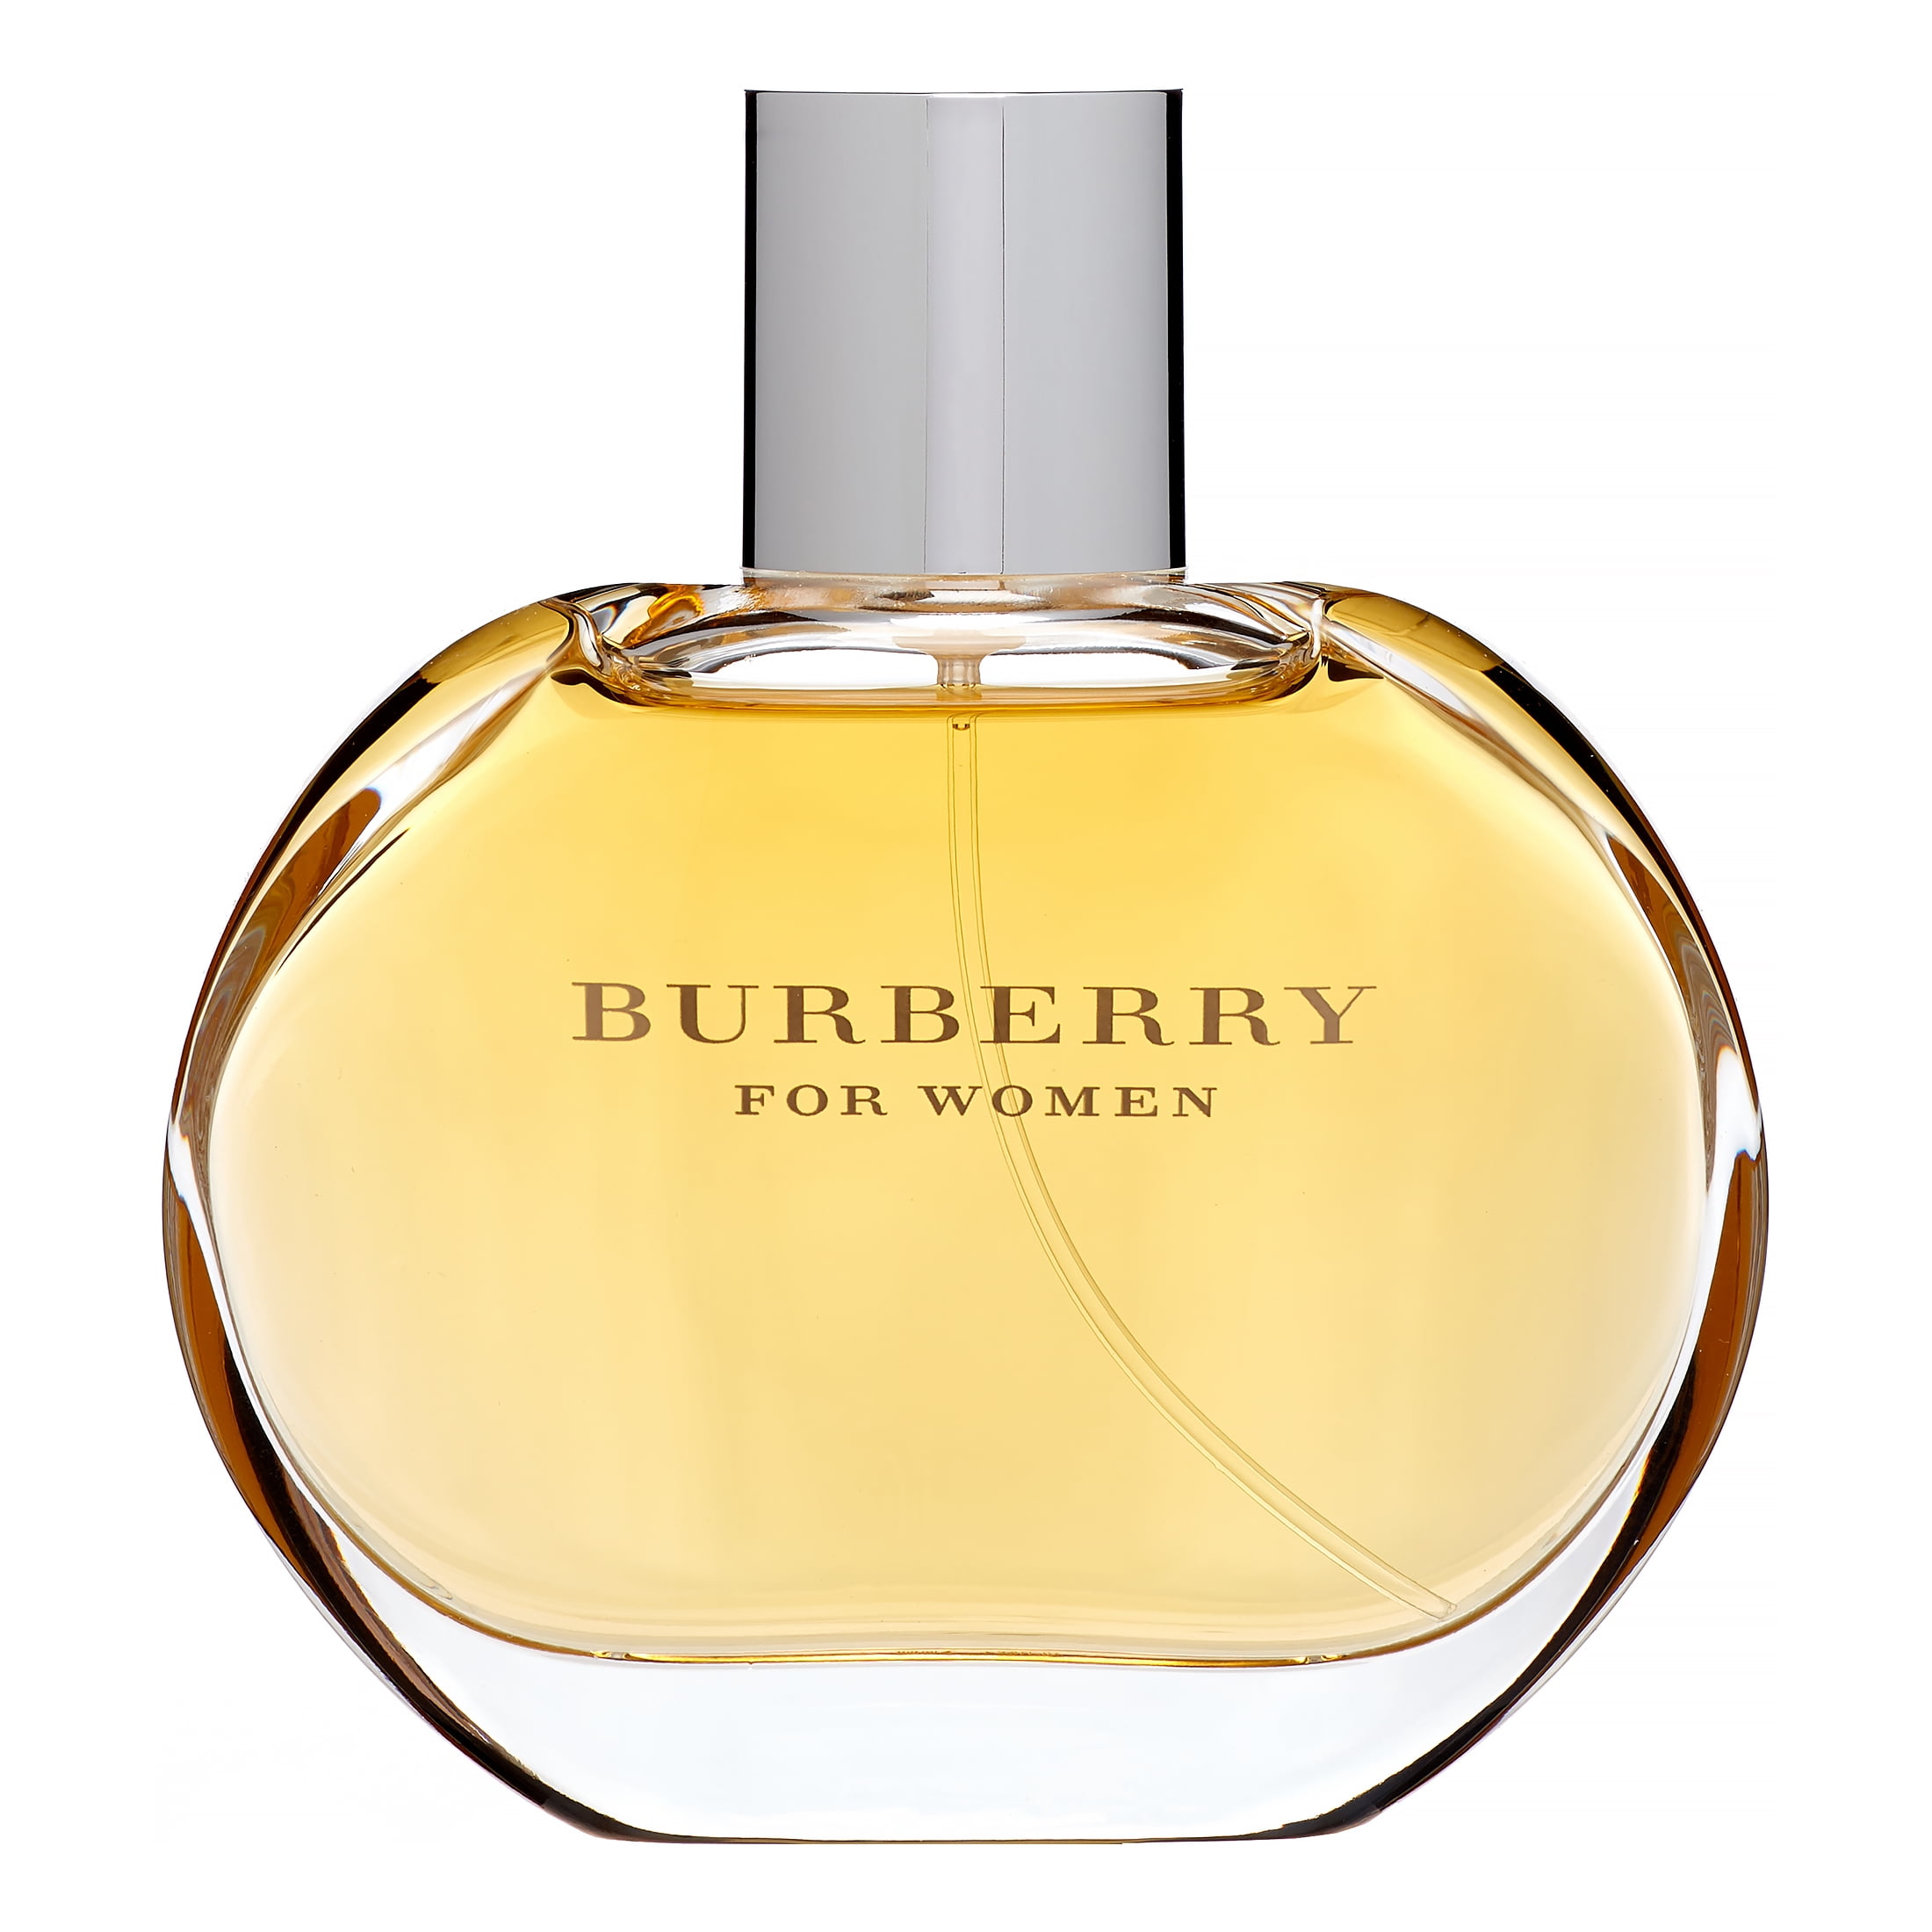 Burberry Classic Eau De Parfum, Perfume For Women, Oz, 54% OFF